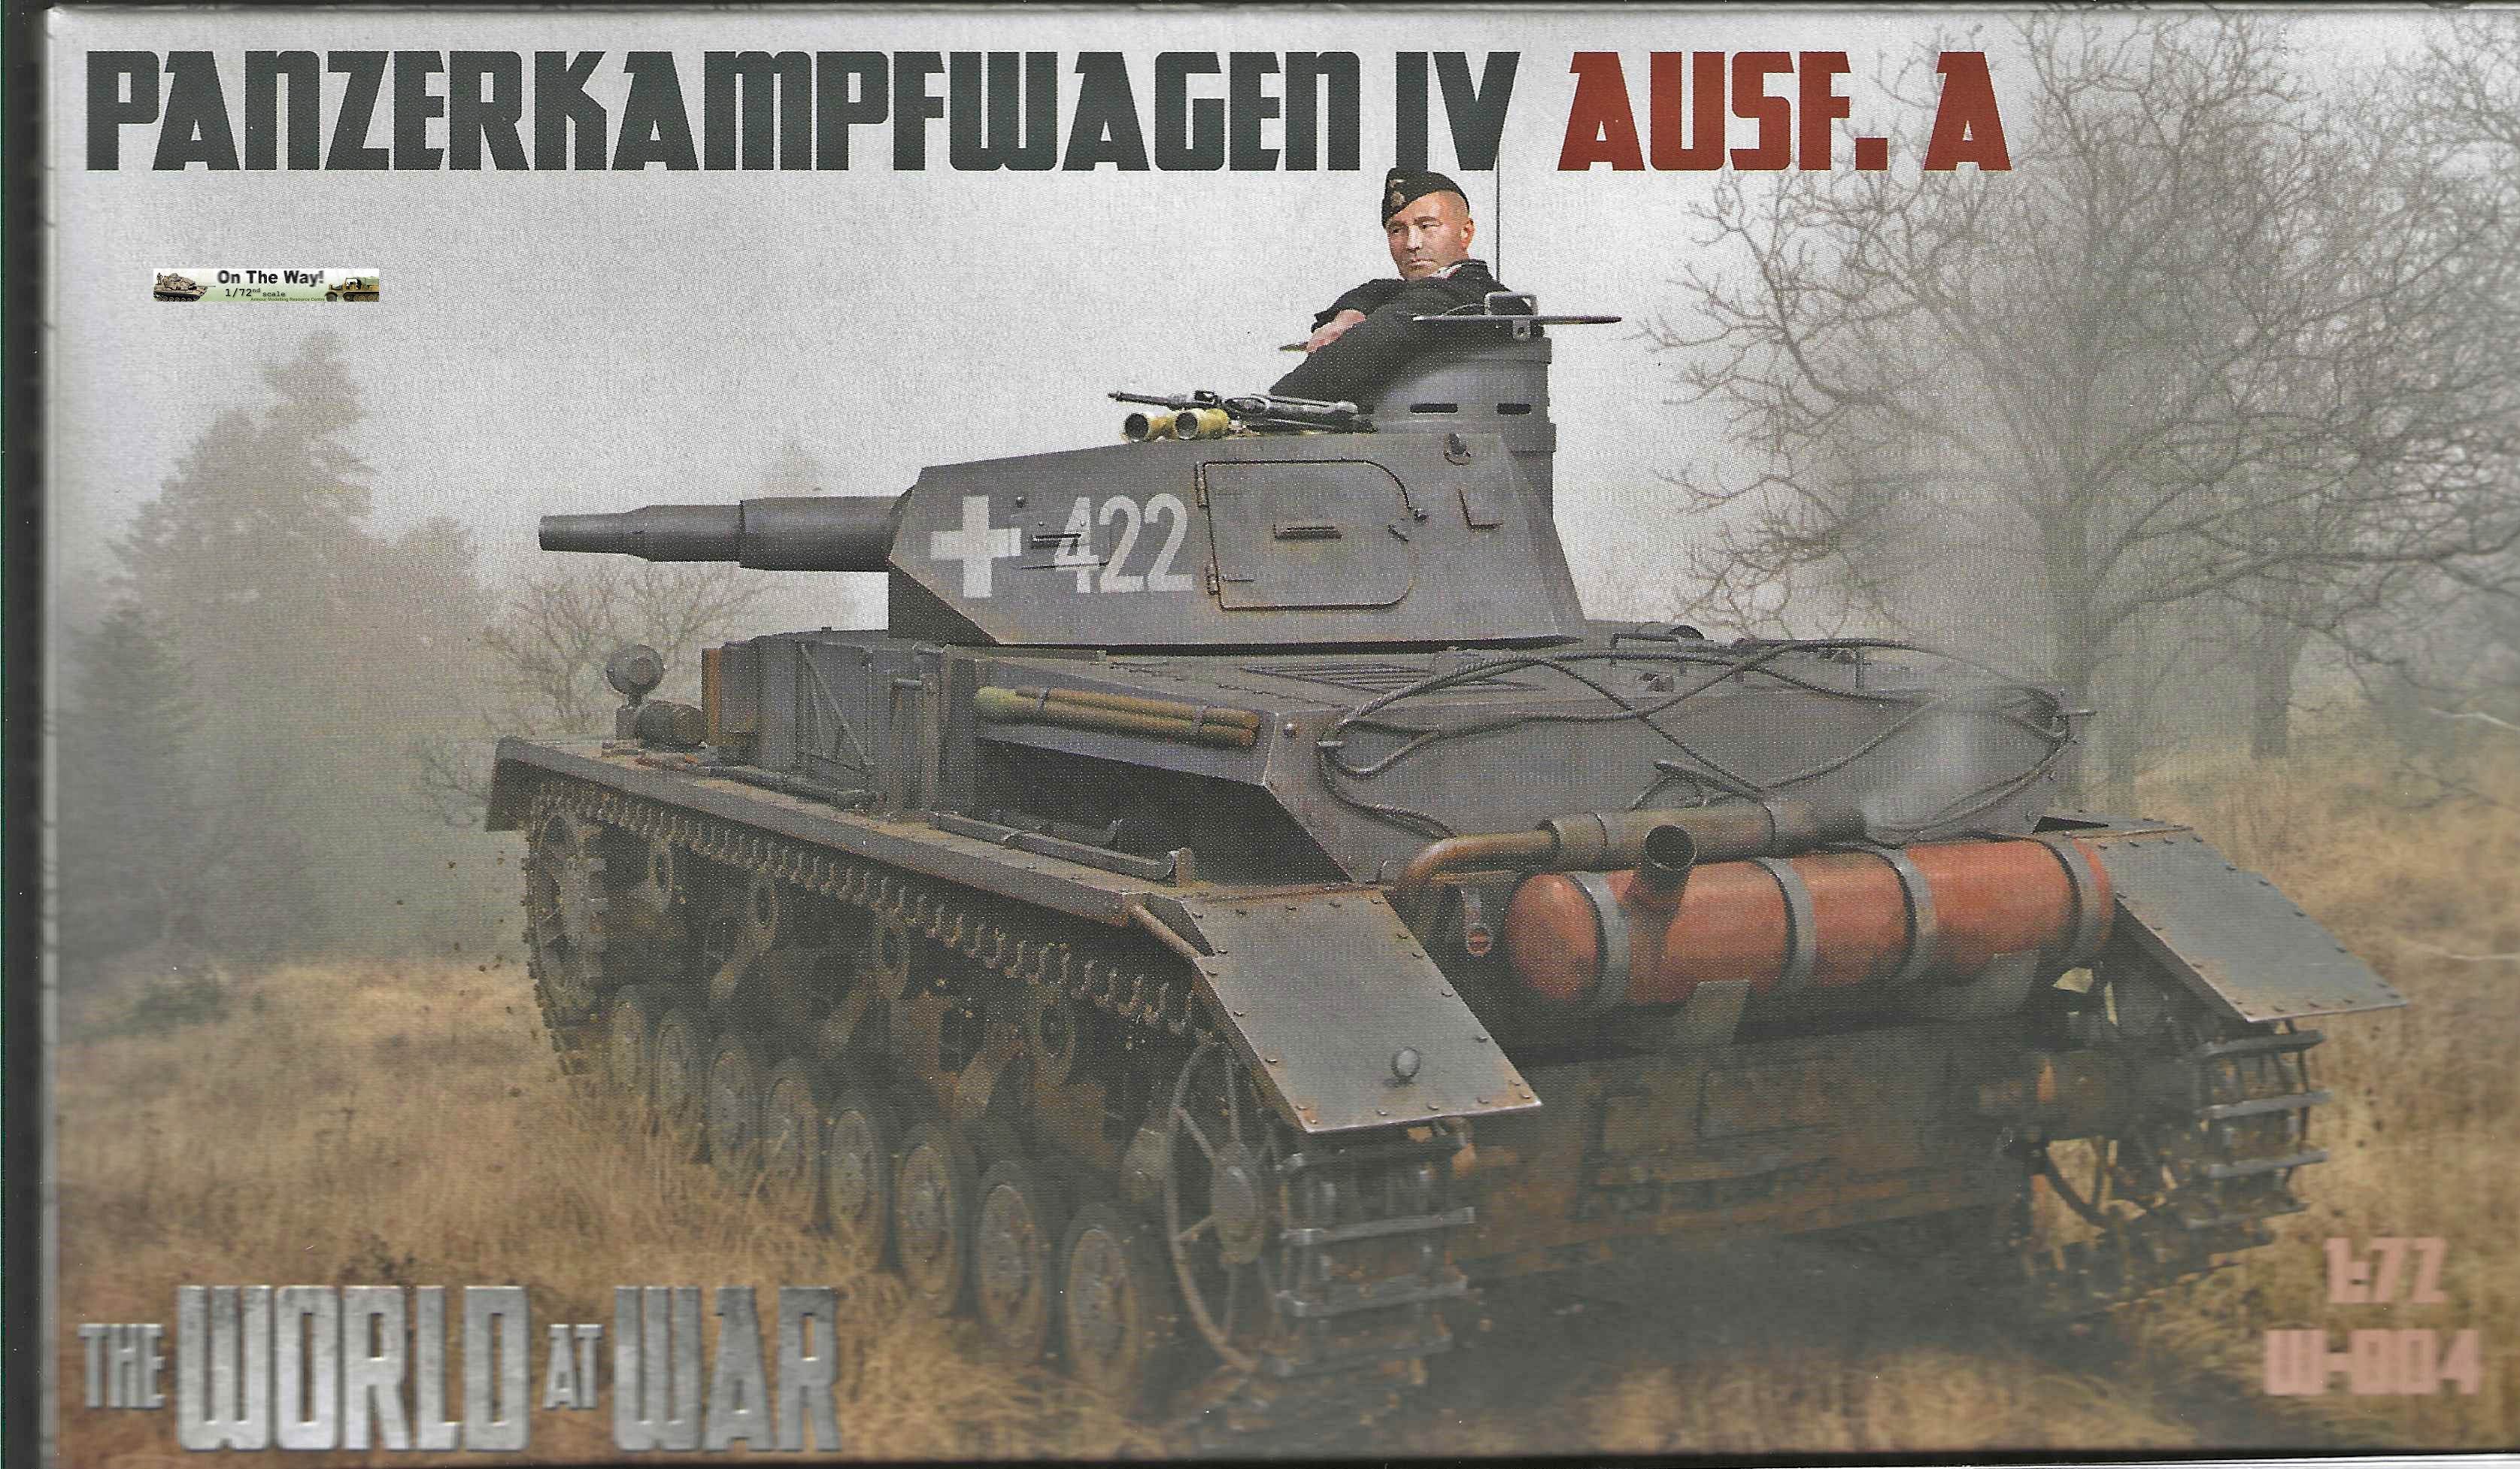 C Pz.Kpfw. IV Ausf. C 1/76 IBG The World at War W-010 Panzerkampfwagen IV Ausf